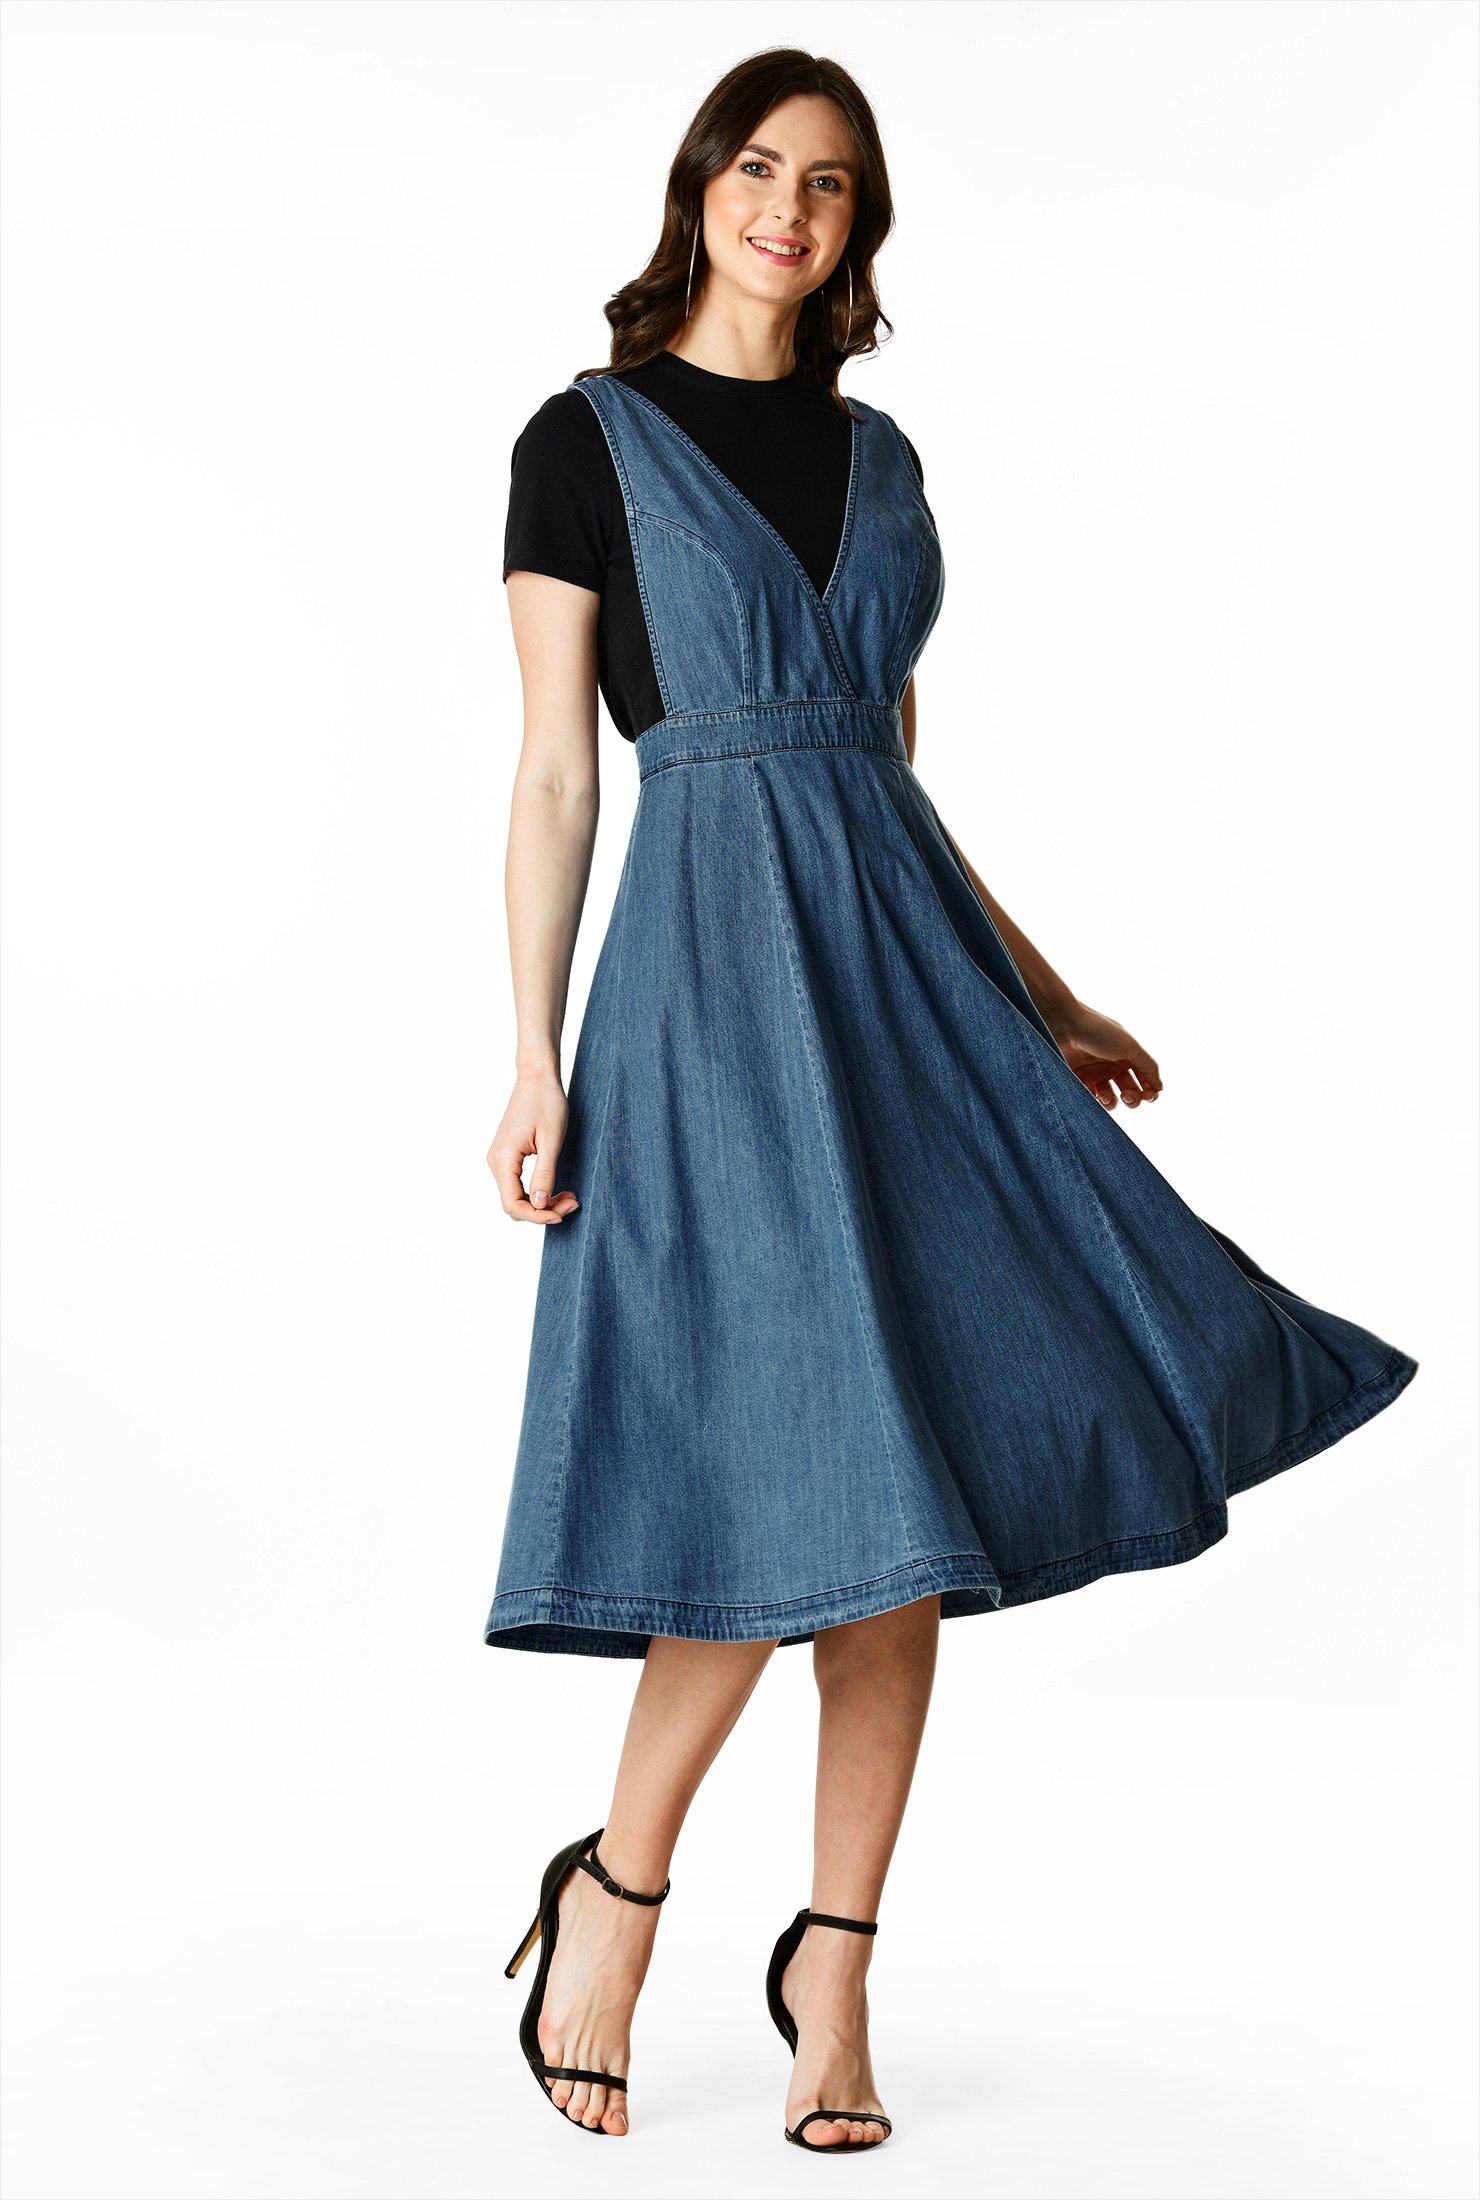 Shop Cotton denim jumper dress | eShakti